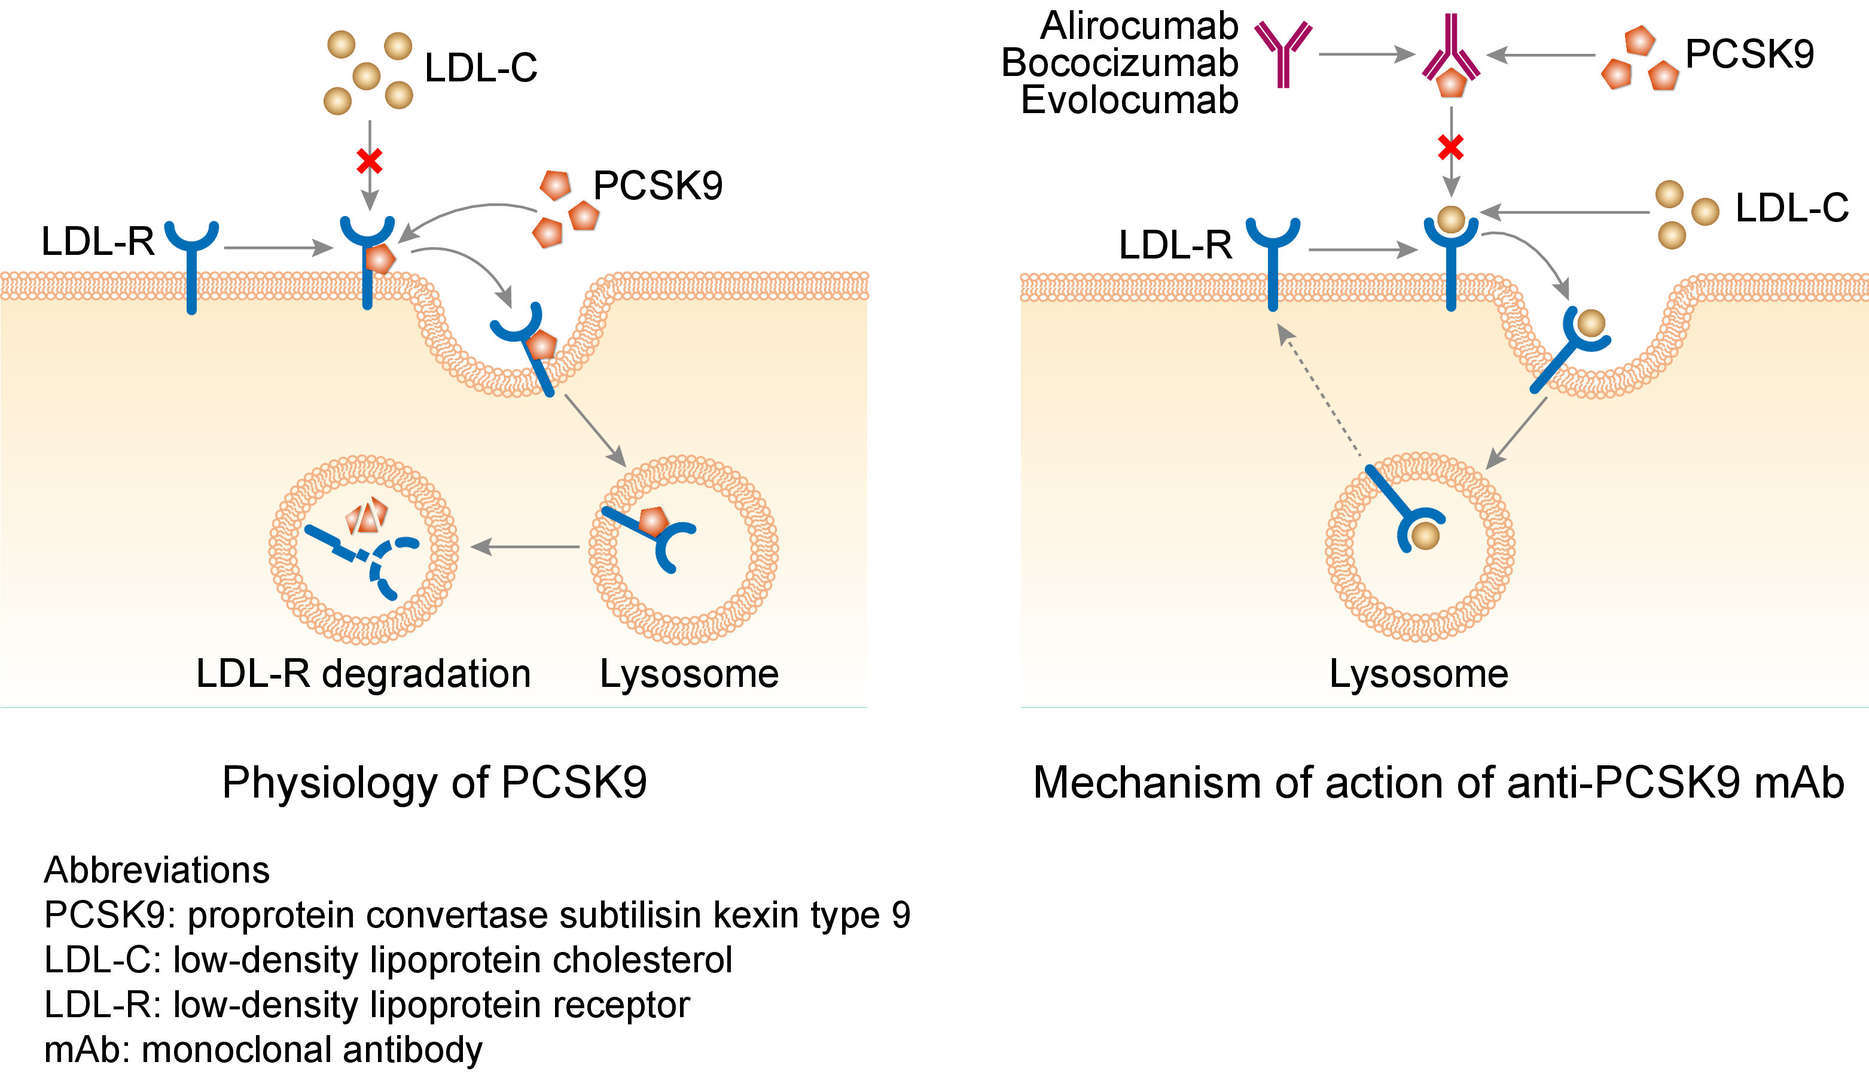 Mechanism of action of bococizumab